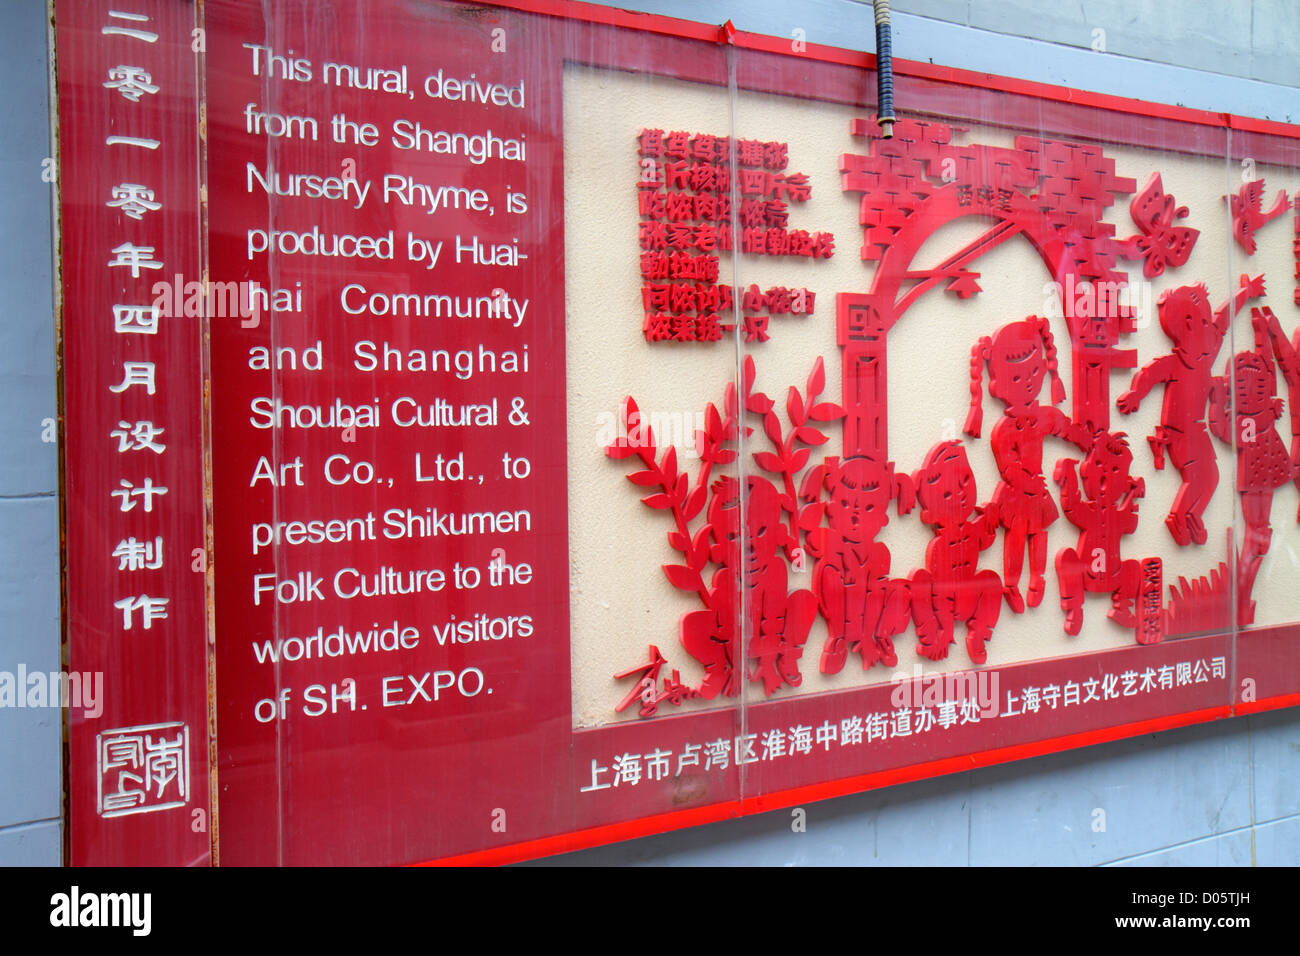 Shanghai China, chinesisches Luwan Viertel, Xintiandi, Fuxing Mittelstraße, Huai hai Gemeinde, Wandbild, zeigt Kinderreim, Mandarin, hanzi, Zeichen, Symbole, en Stockfoto